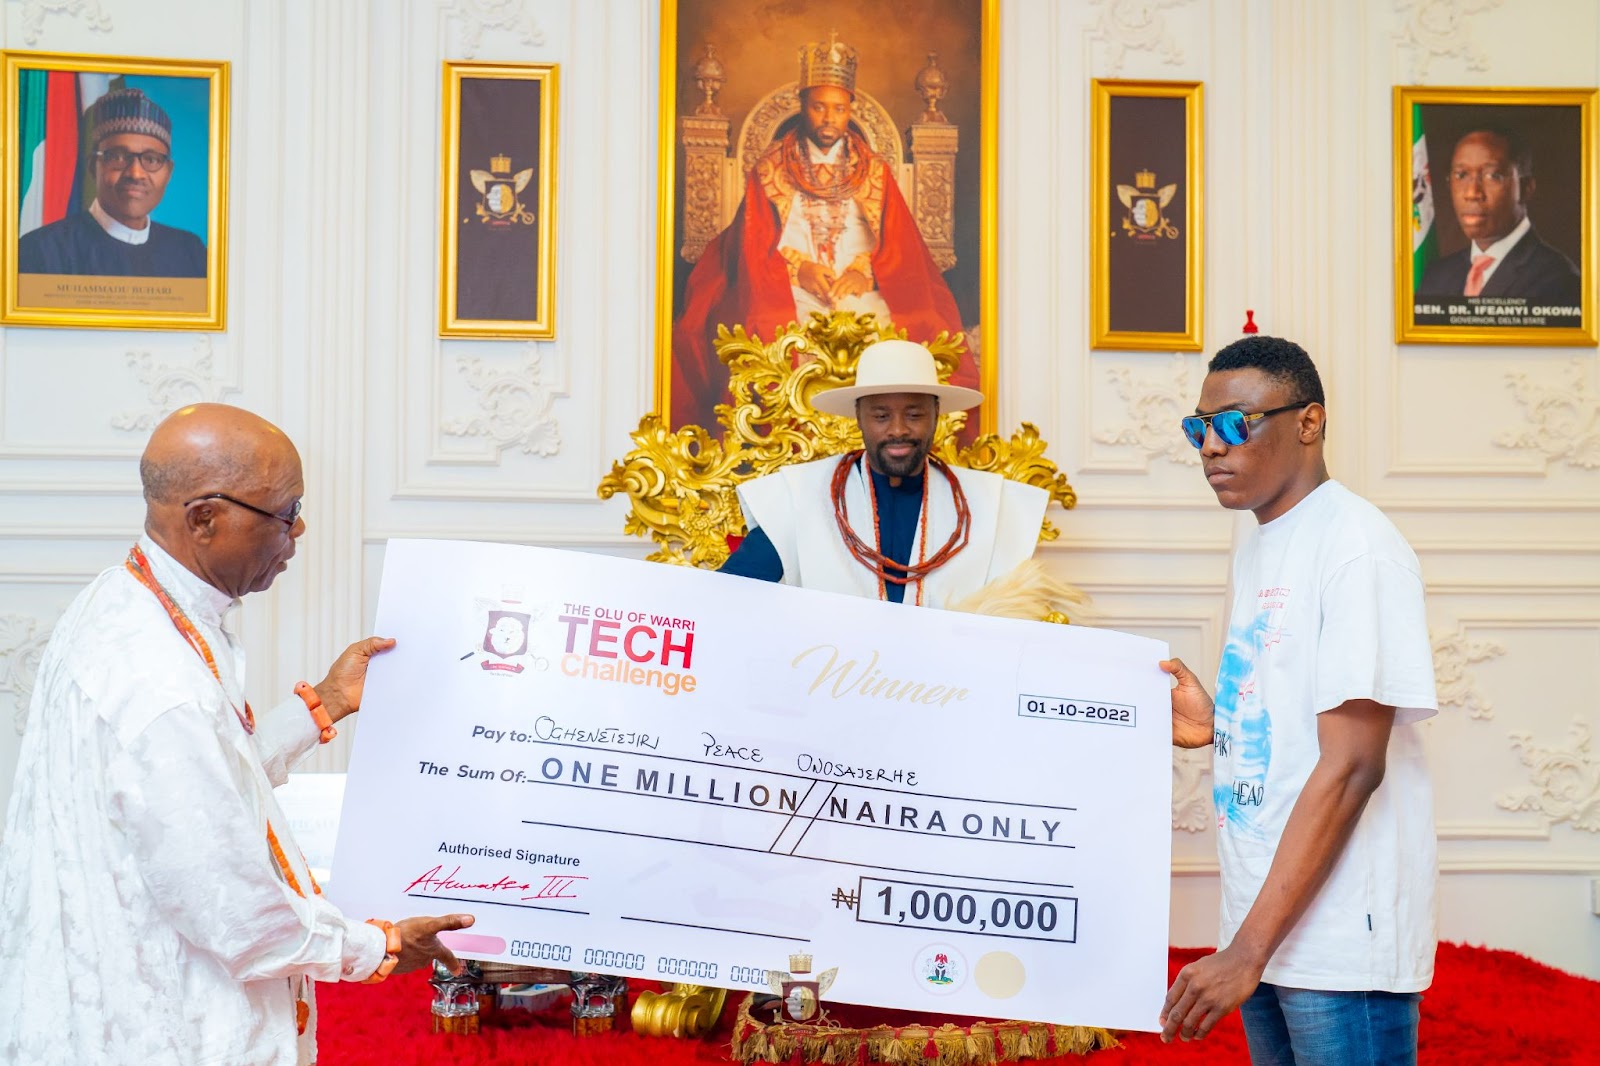 Olu of Warri Tech Challenge 2022 Winner emerges, bags N1 million